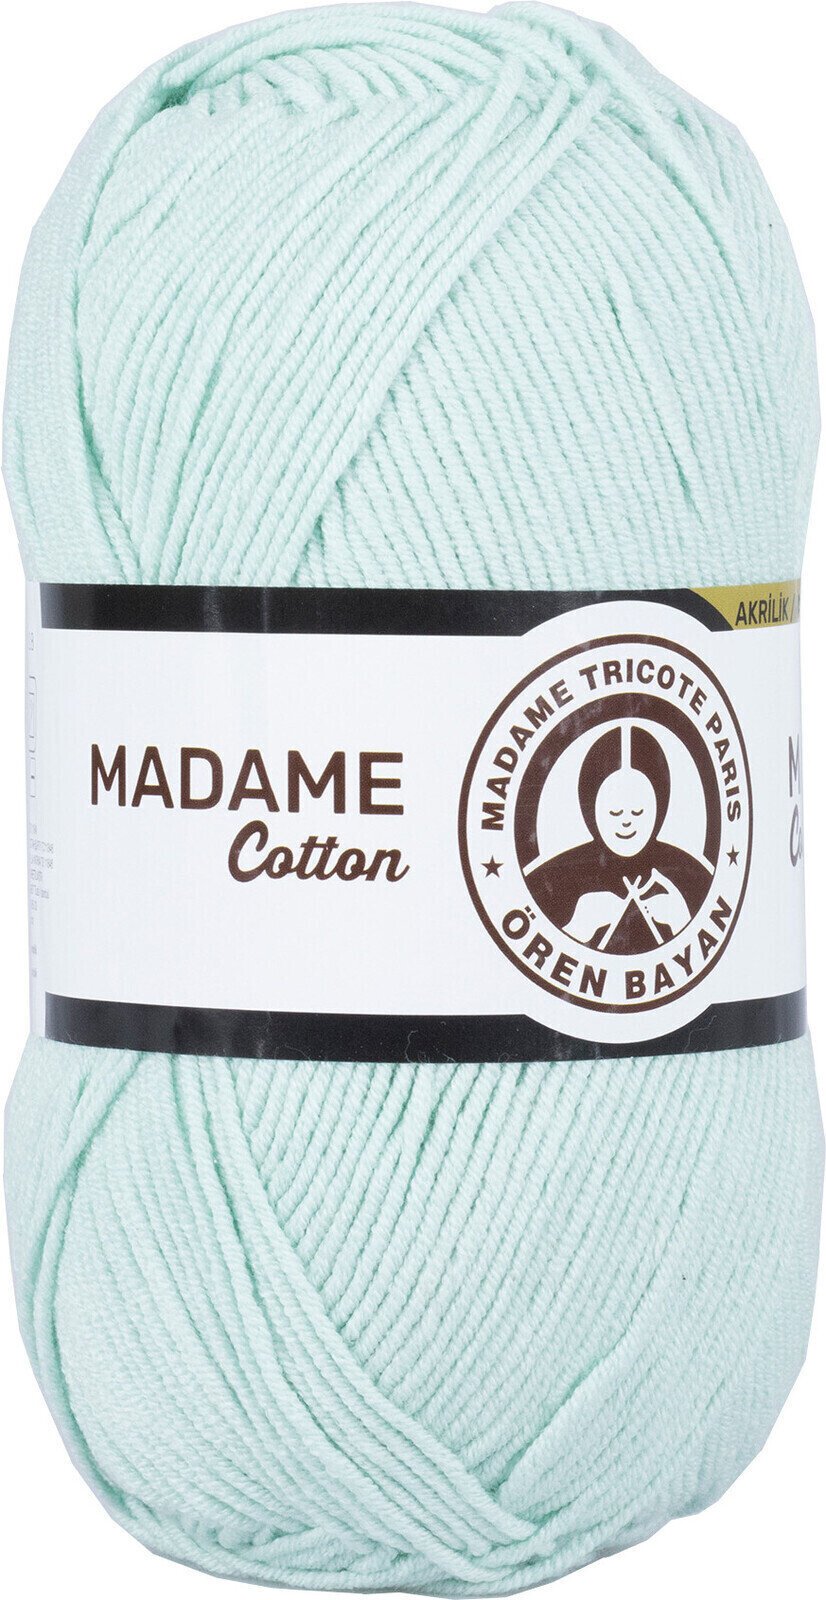 Breigaren Madame Tricote Paris Madame Cotton 017 Pastel Green